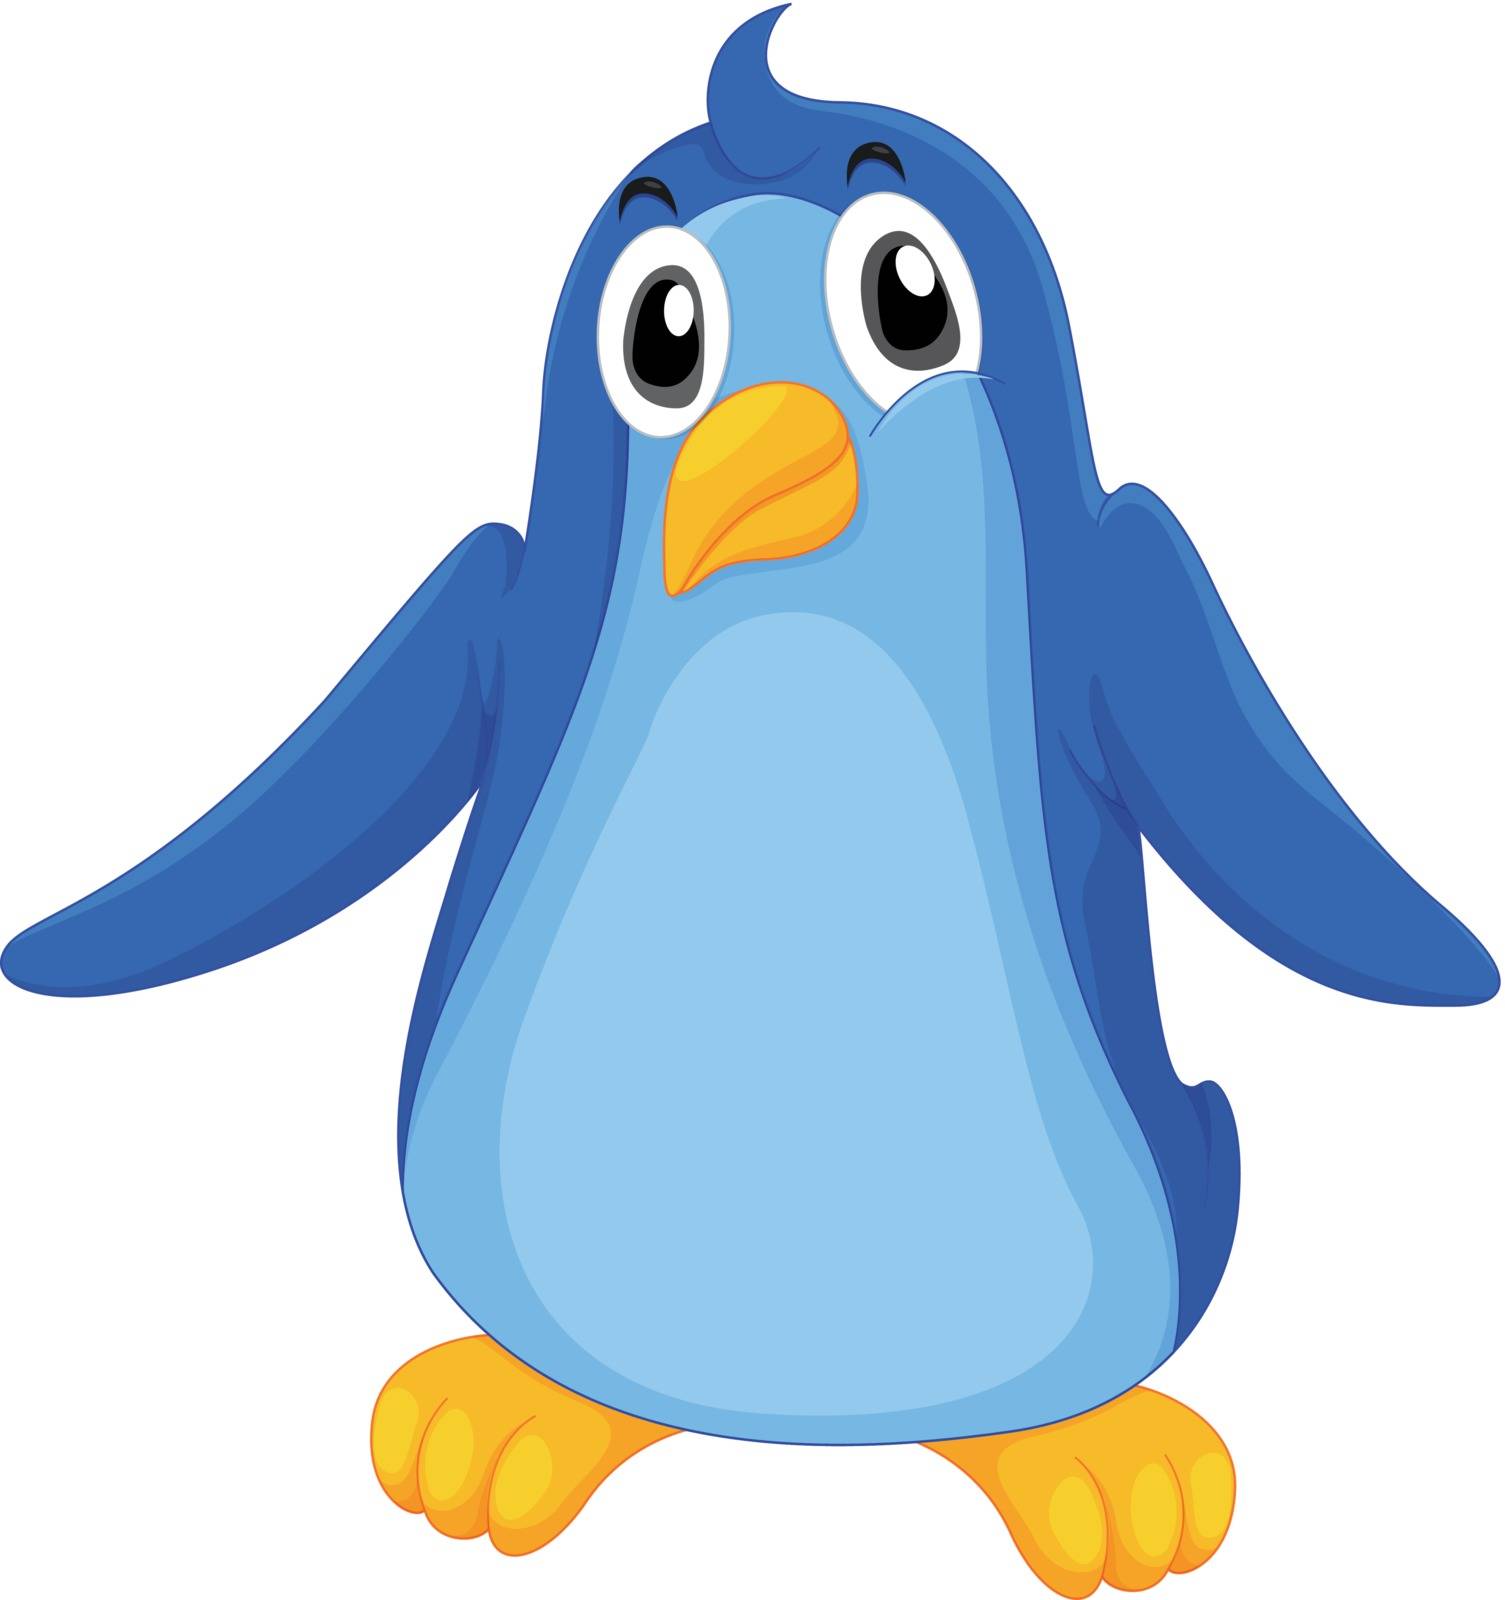 Illustration of a comical penguin